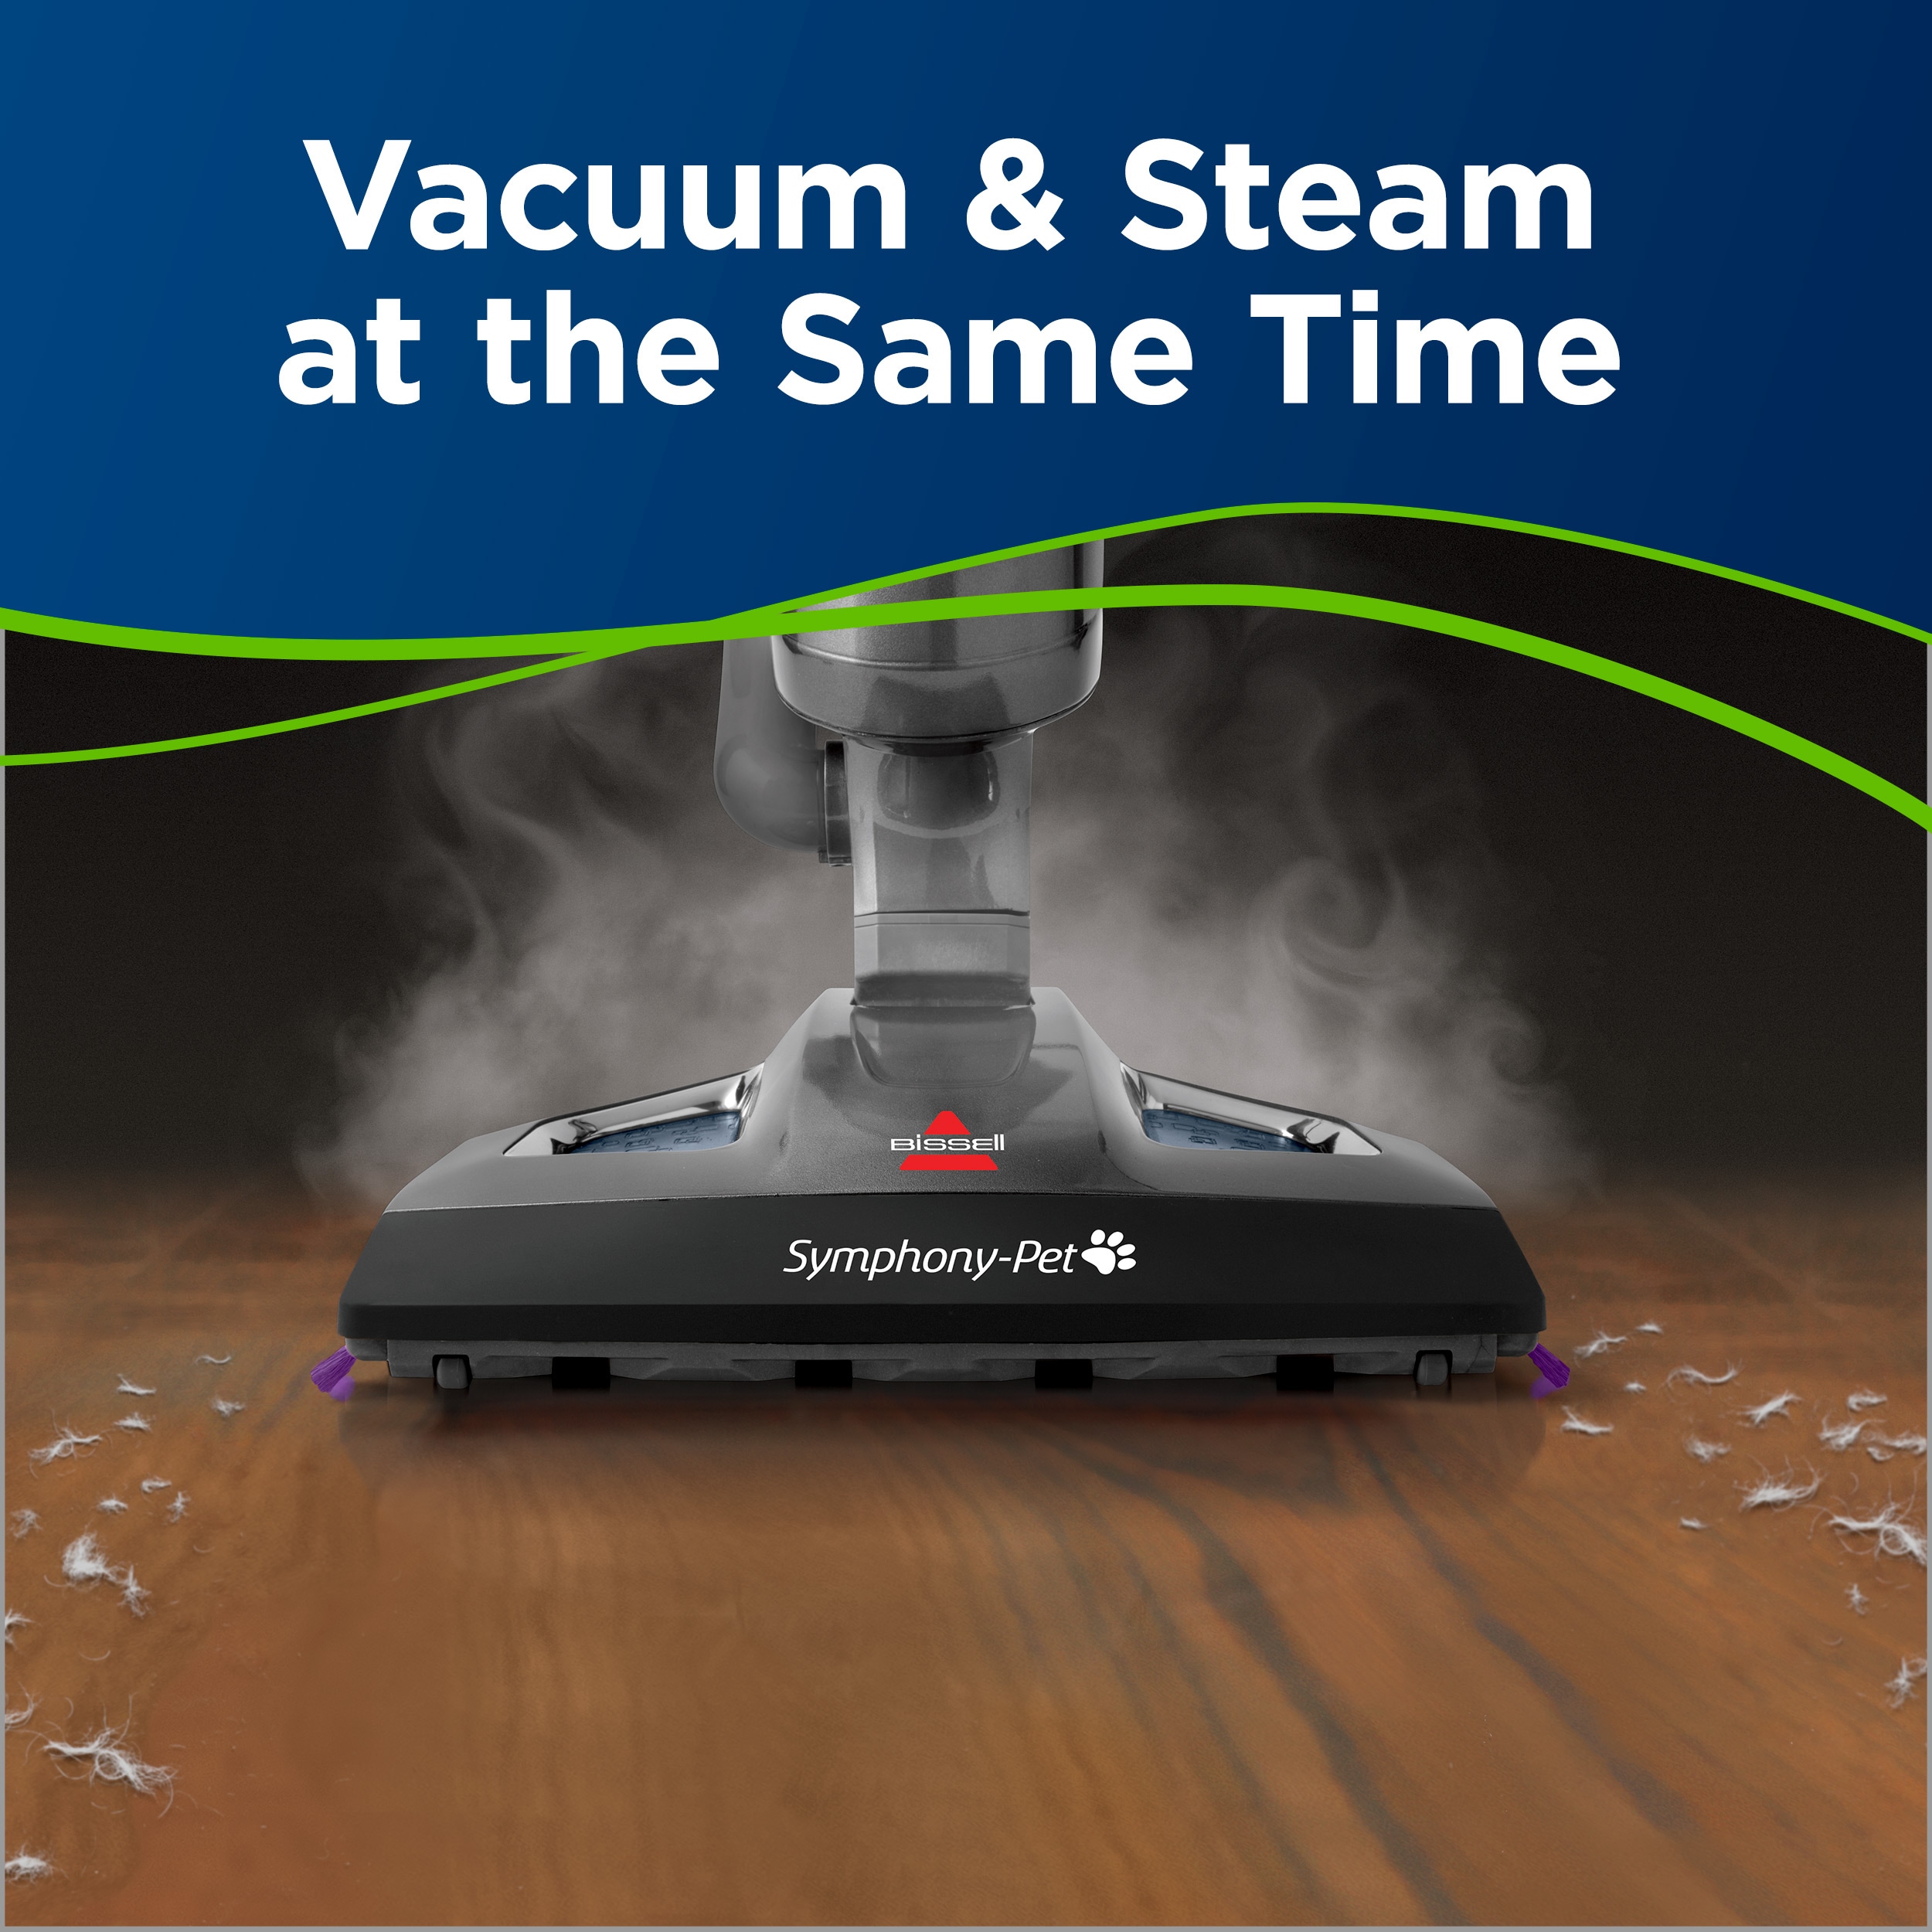 Steam Mop™ Select Lightweight Sanitizing Steam Cleaner, BISSELL®